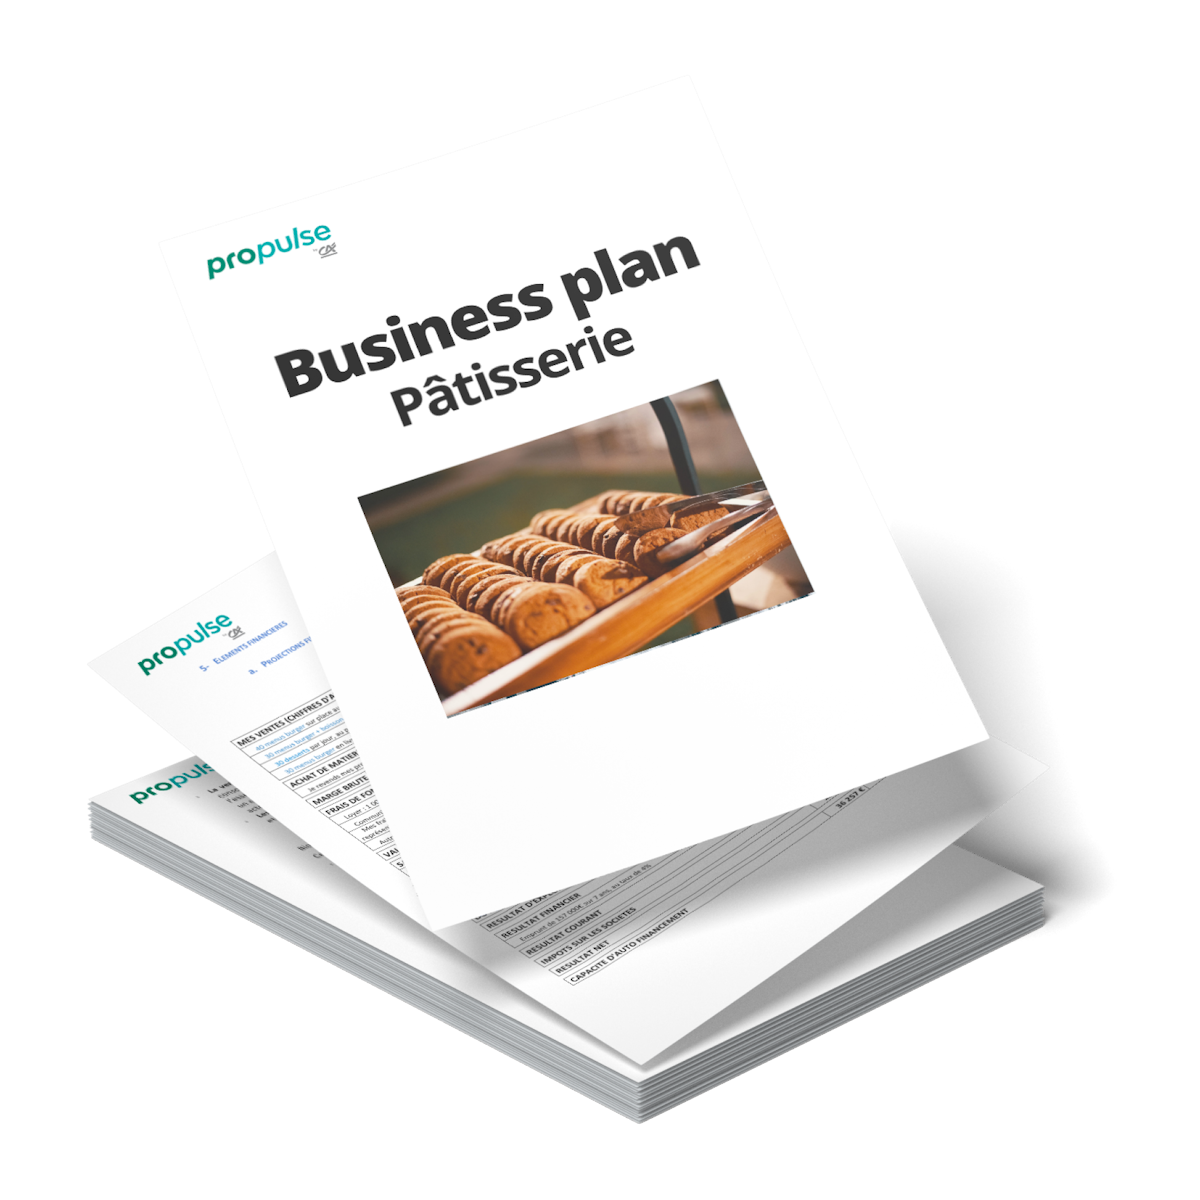 business plan patisserie pdf